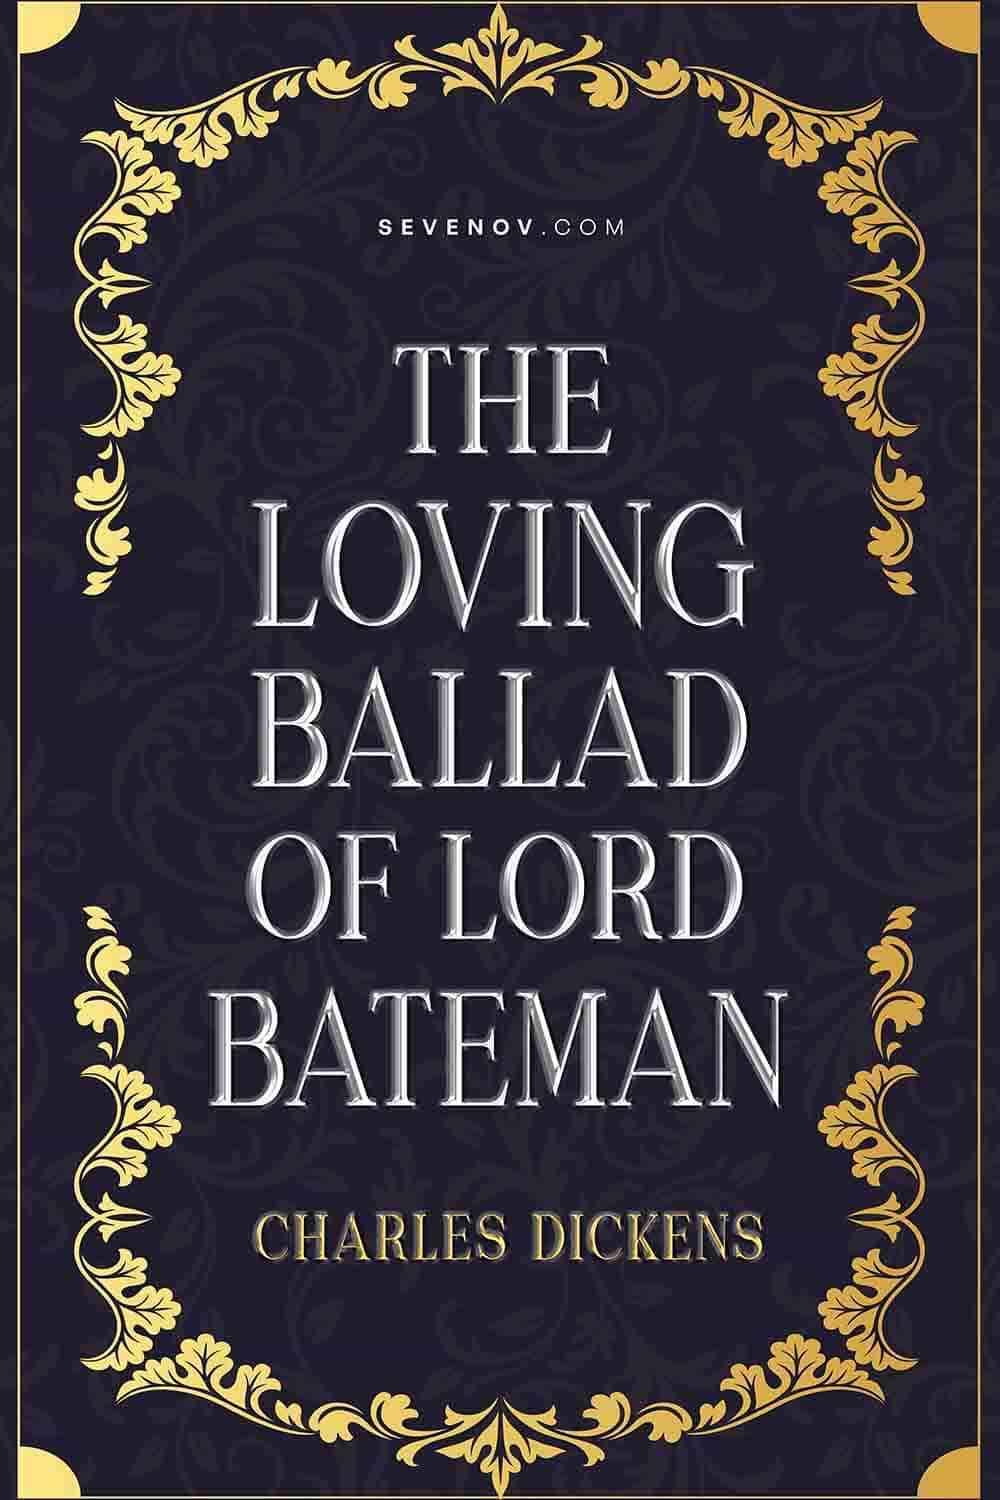 https://pagevio.com/wp-content/uploads/2023/01/the-loving-ballad-of-lord-bateman-20220901.jpg